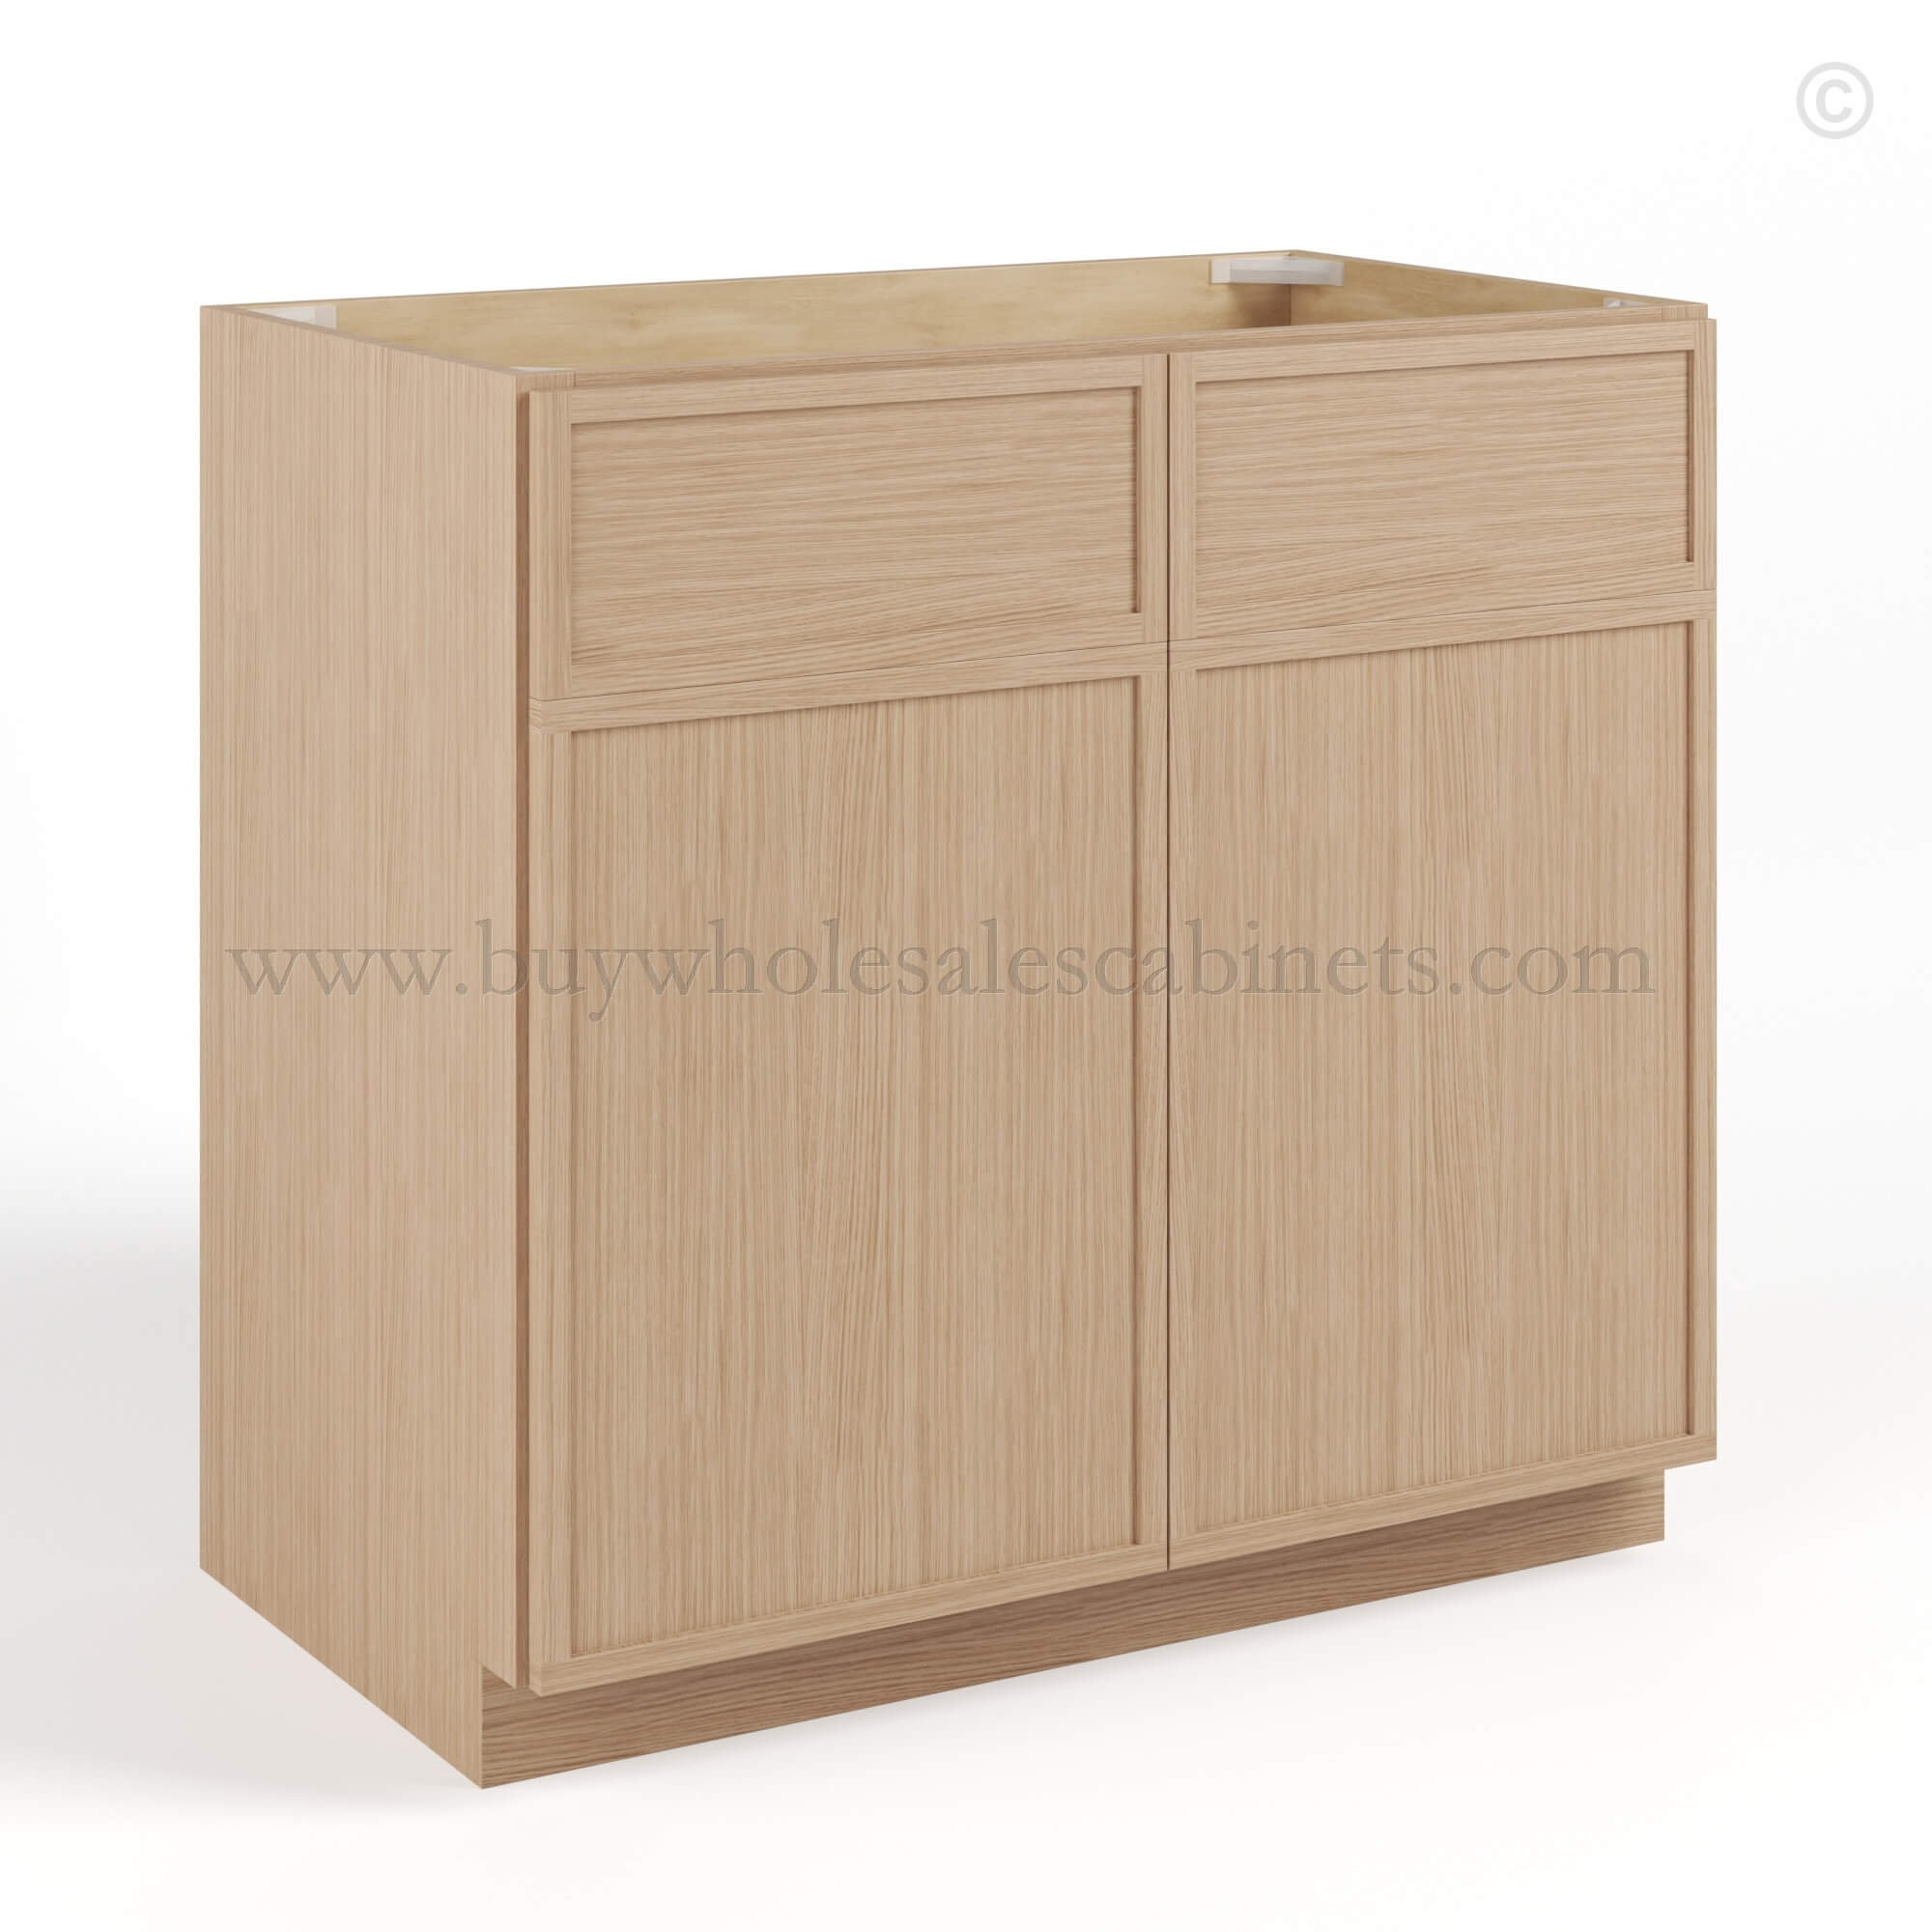 Slim Oak Shaker Sink Base With Double Doors, rta cabinets, wholesale cabinets